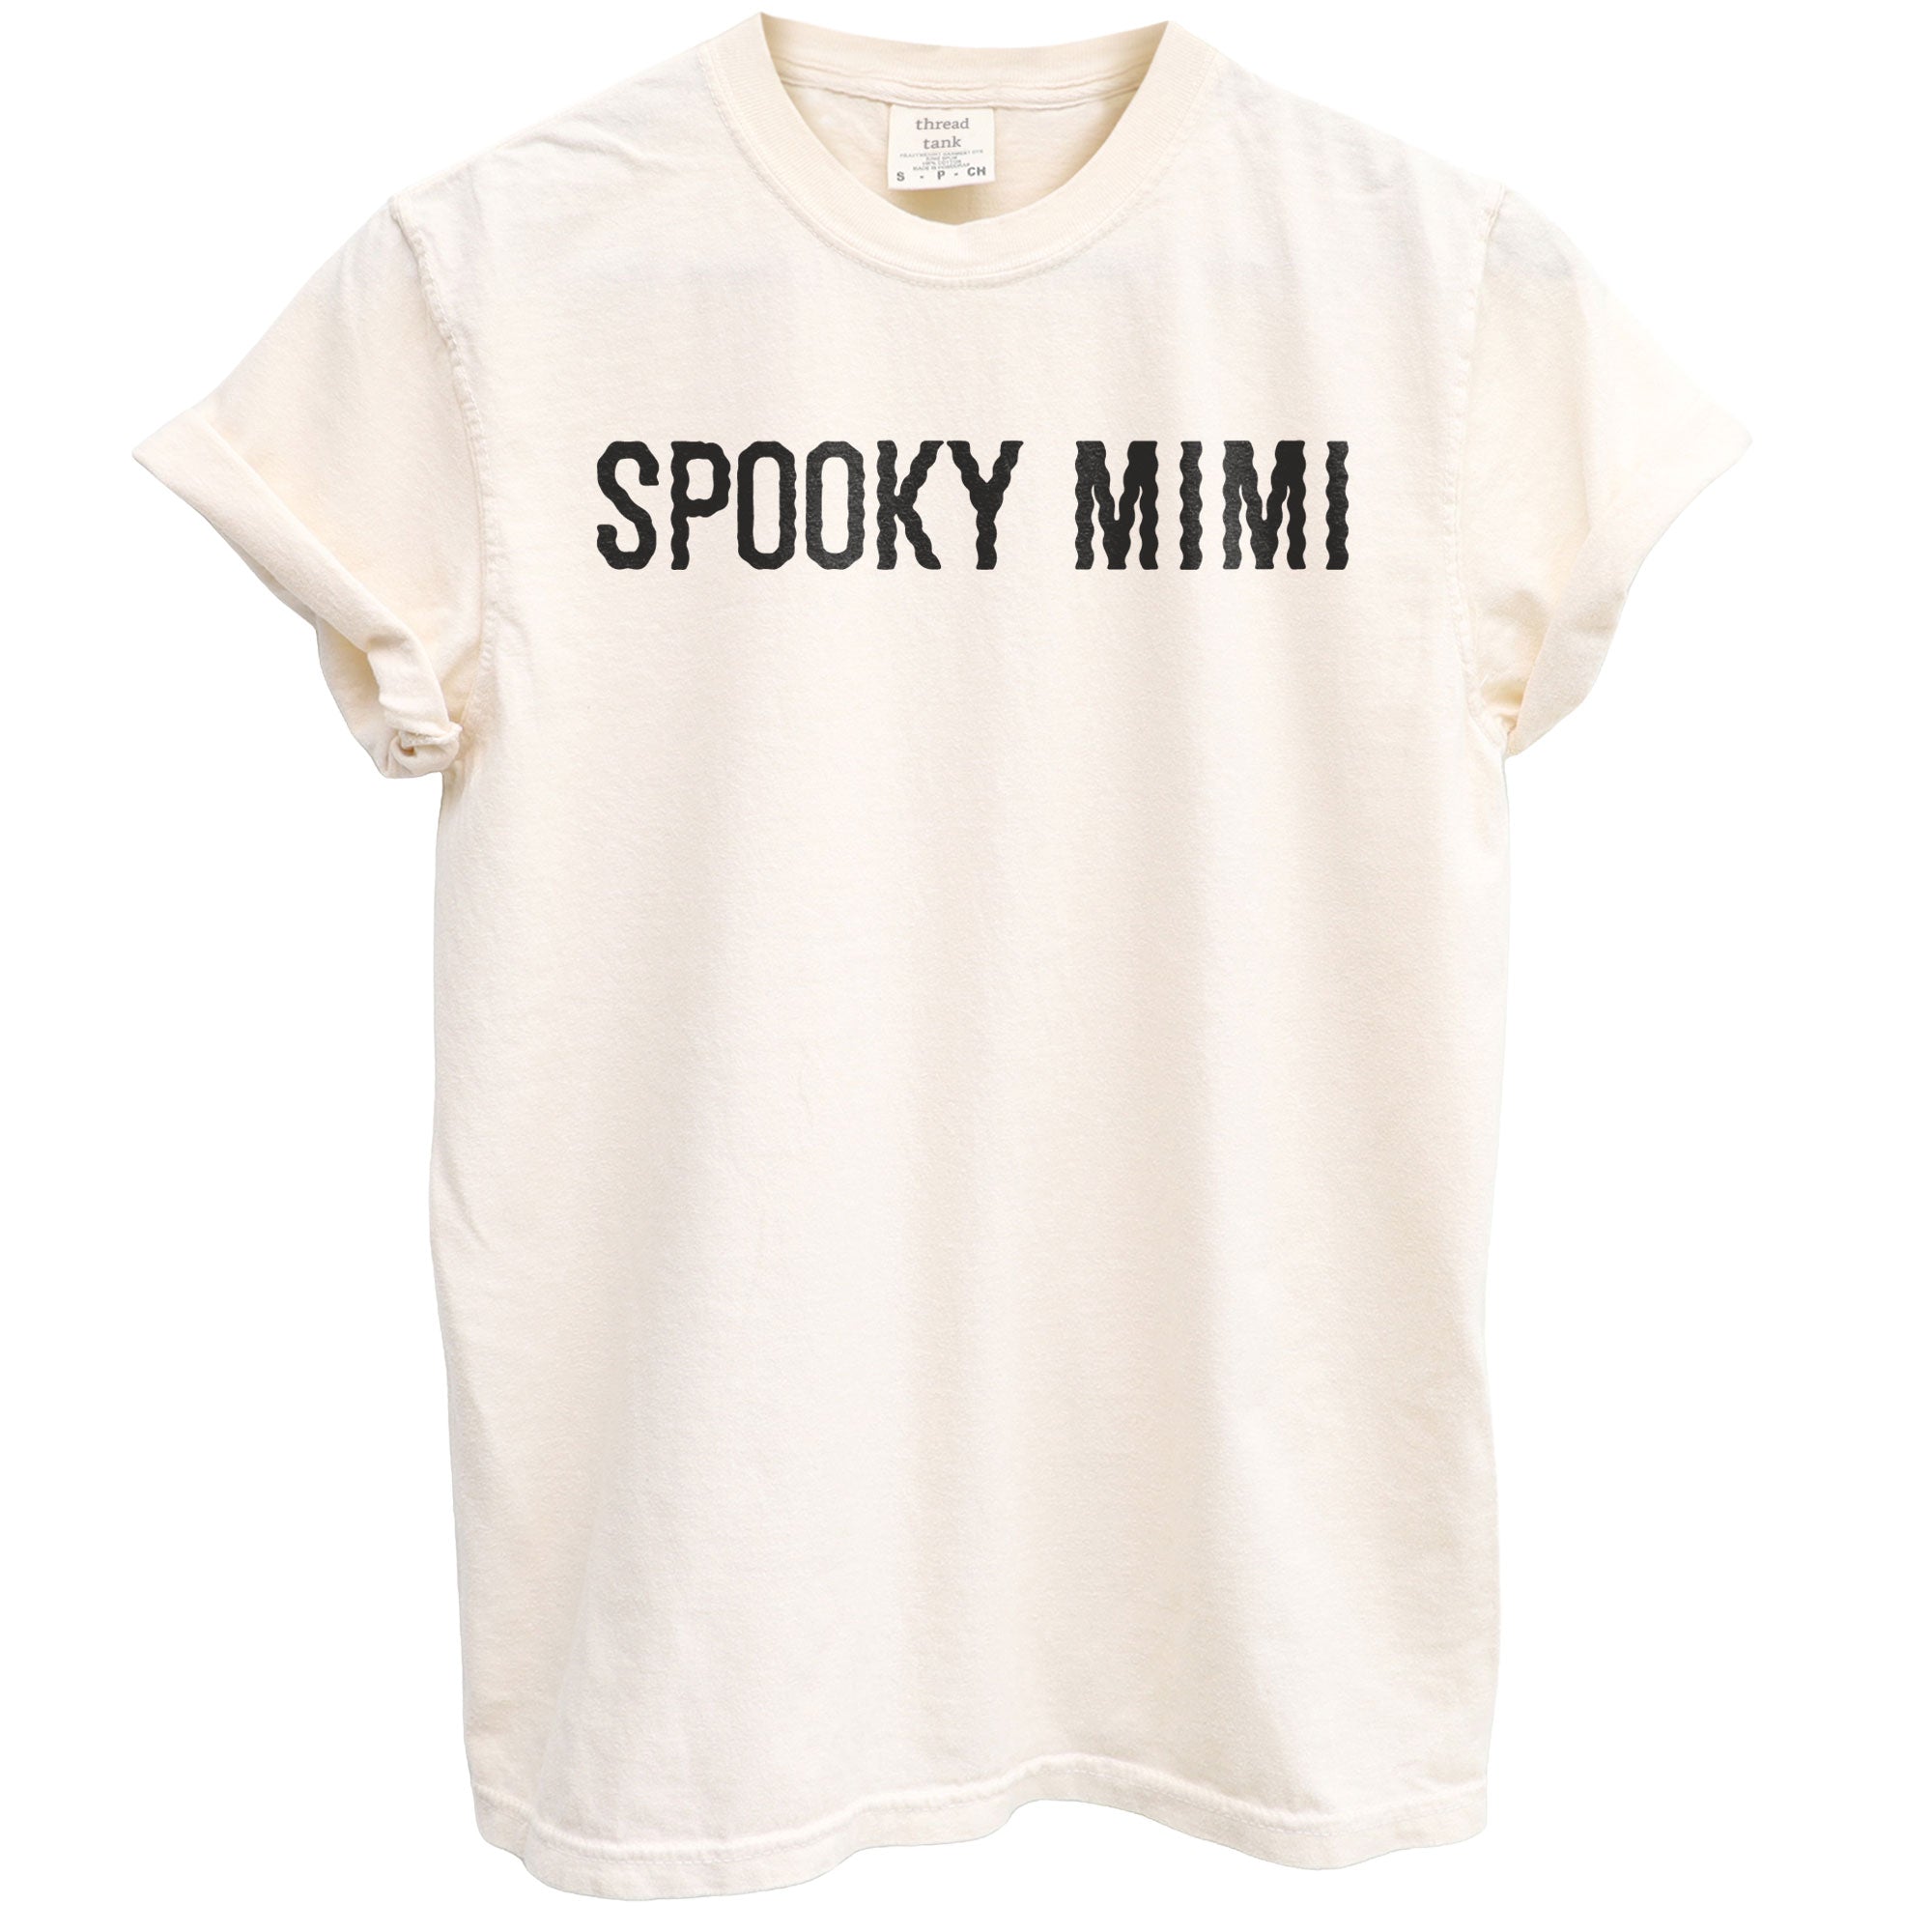 spooky mimi oversized garment dyed shirt